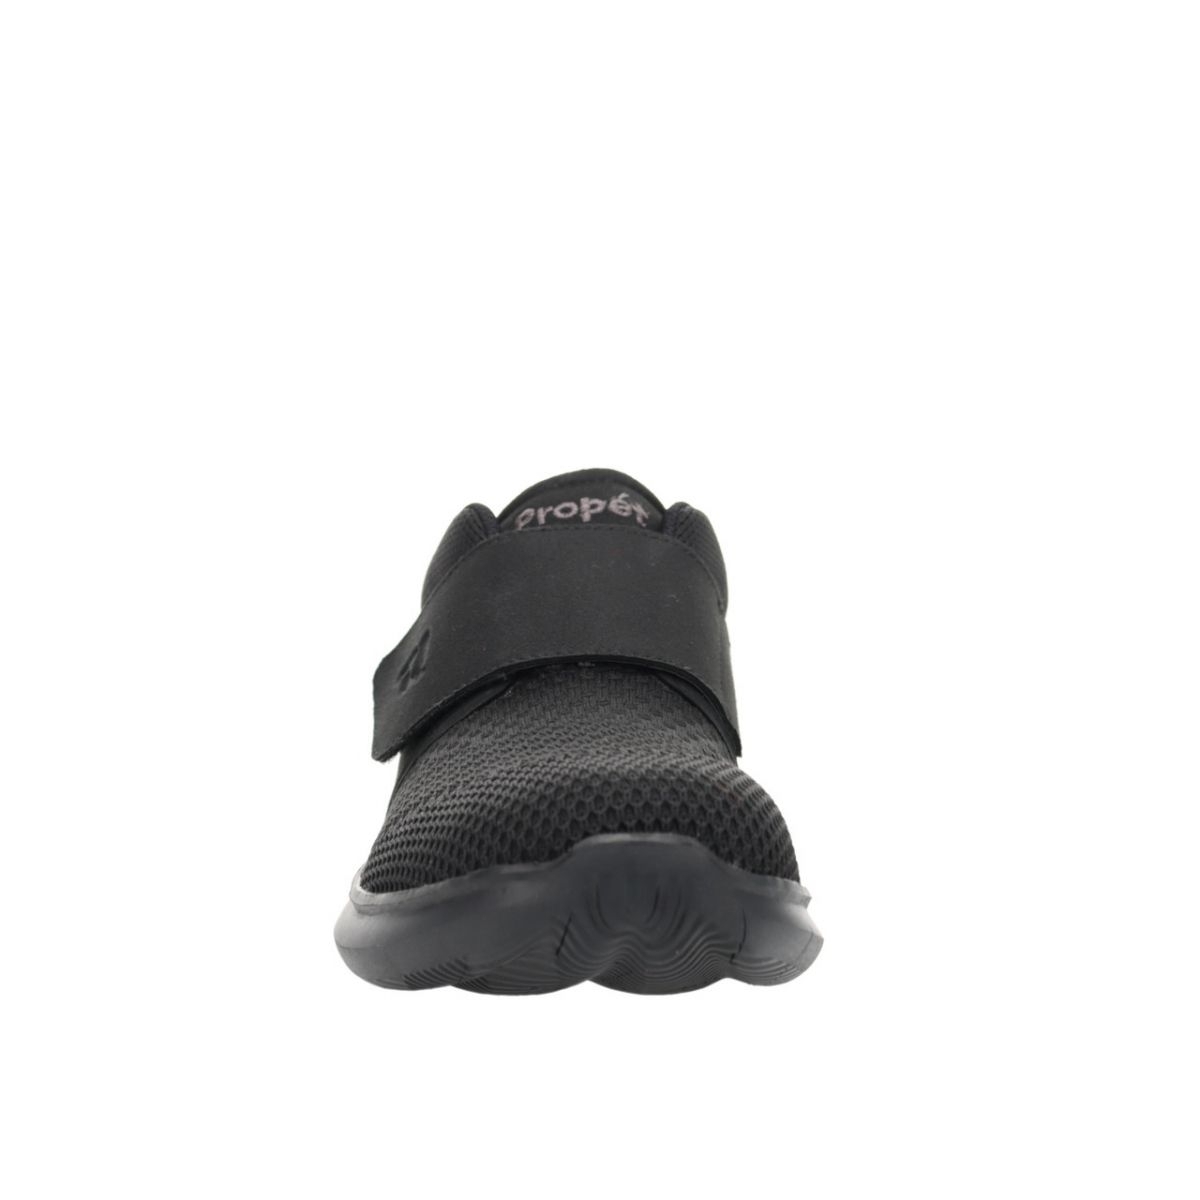 Propet Men's Viator Strap Walking Shoe All Black - MAA073MABL ALL BLACK - ALL BLACK, 8 X-Wide